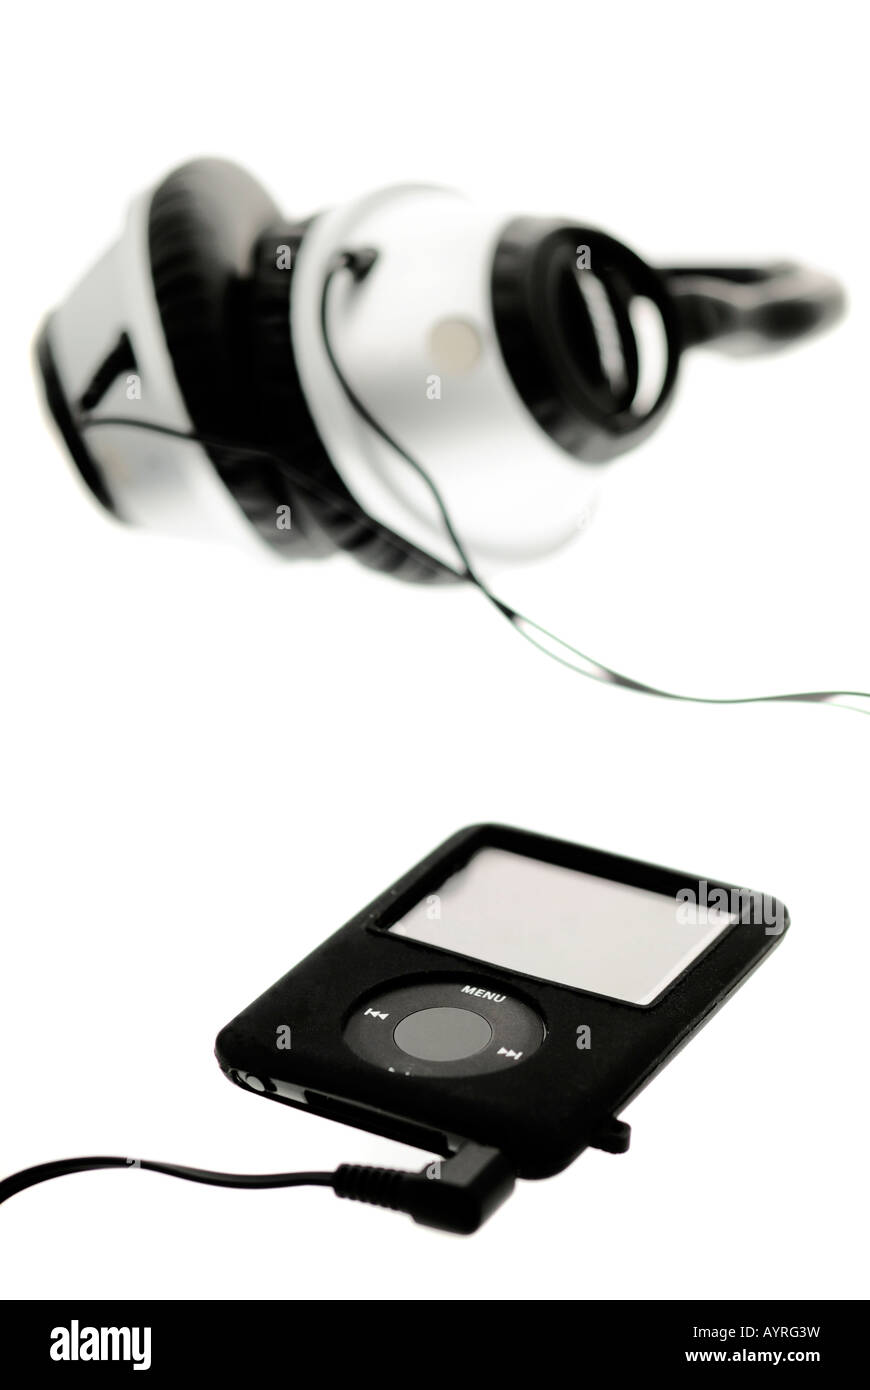 Apple Ipod Nano and Headphones Stock Photo